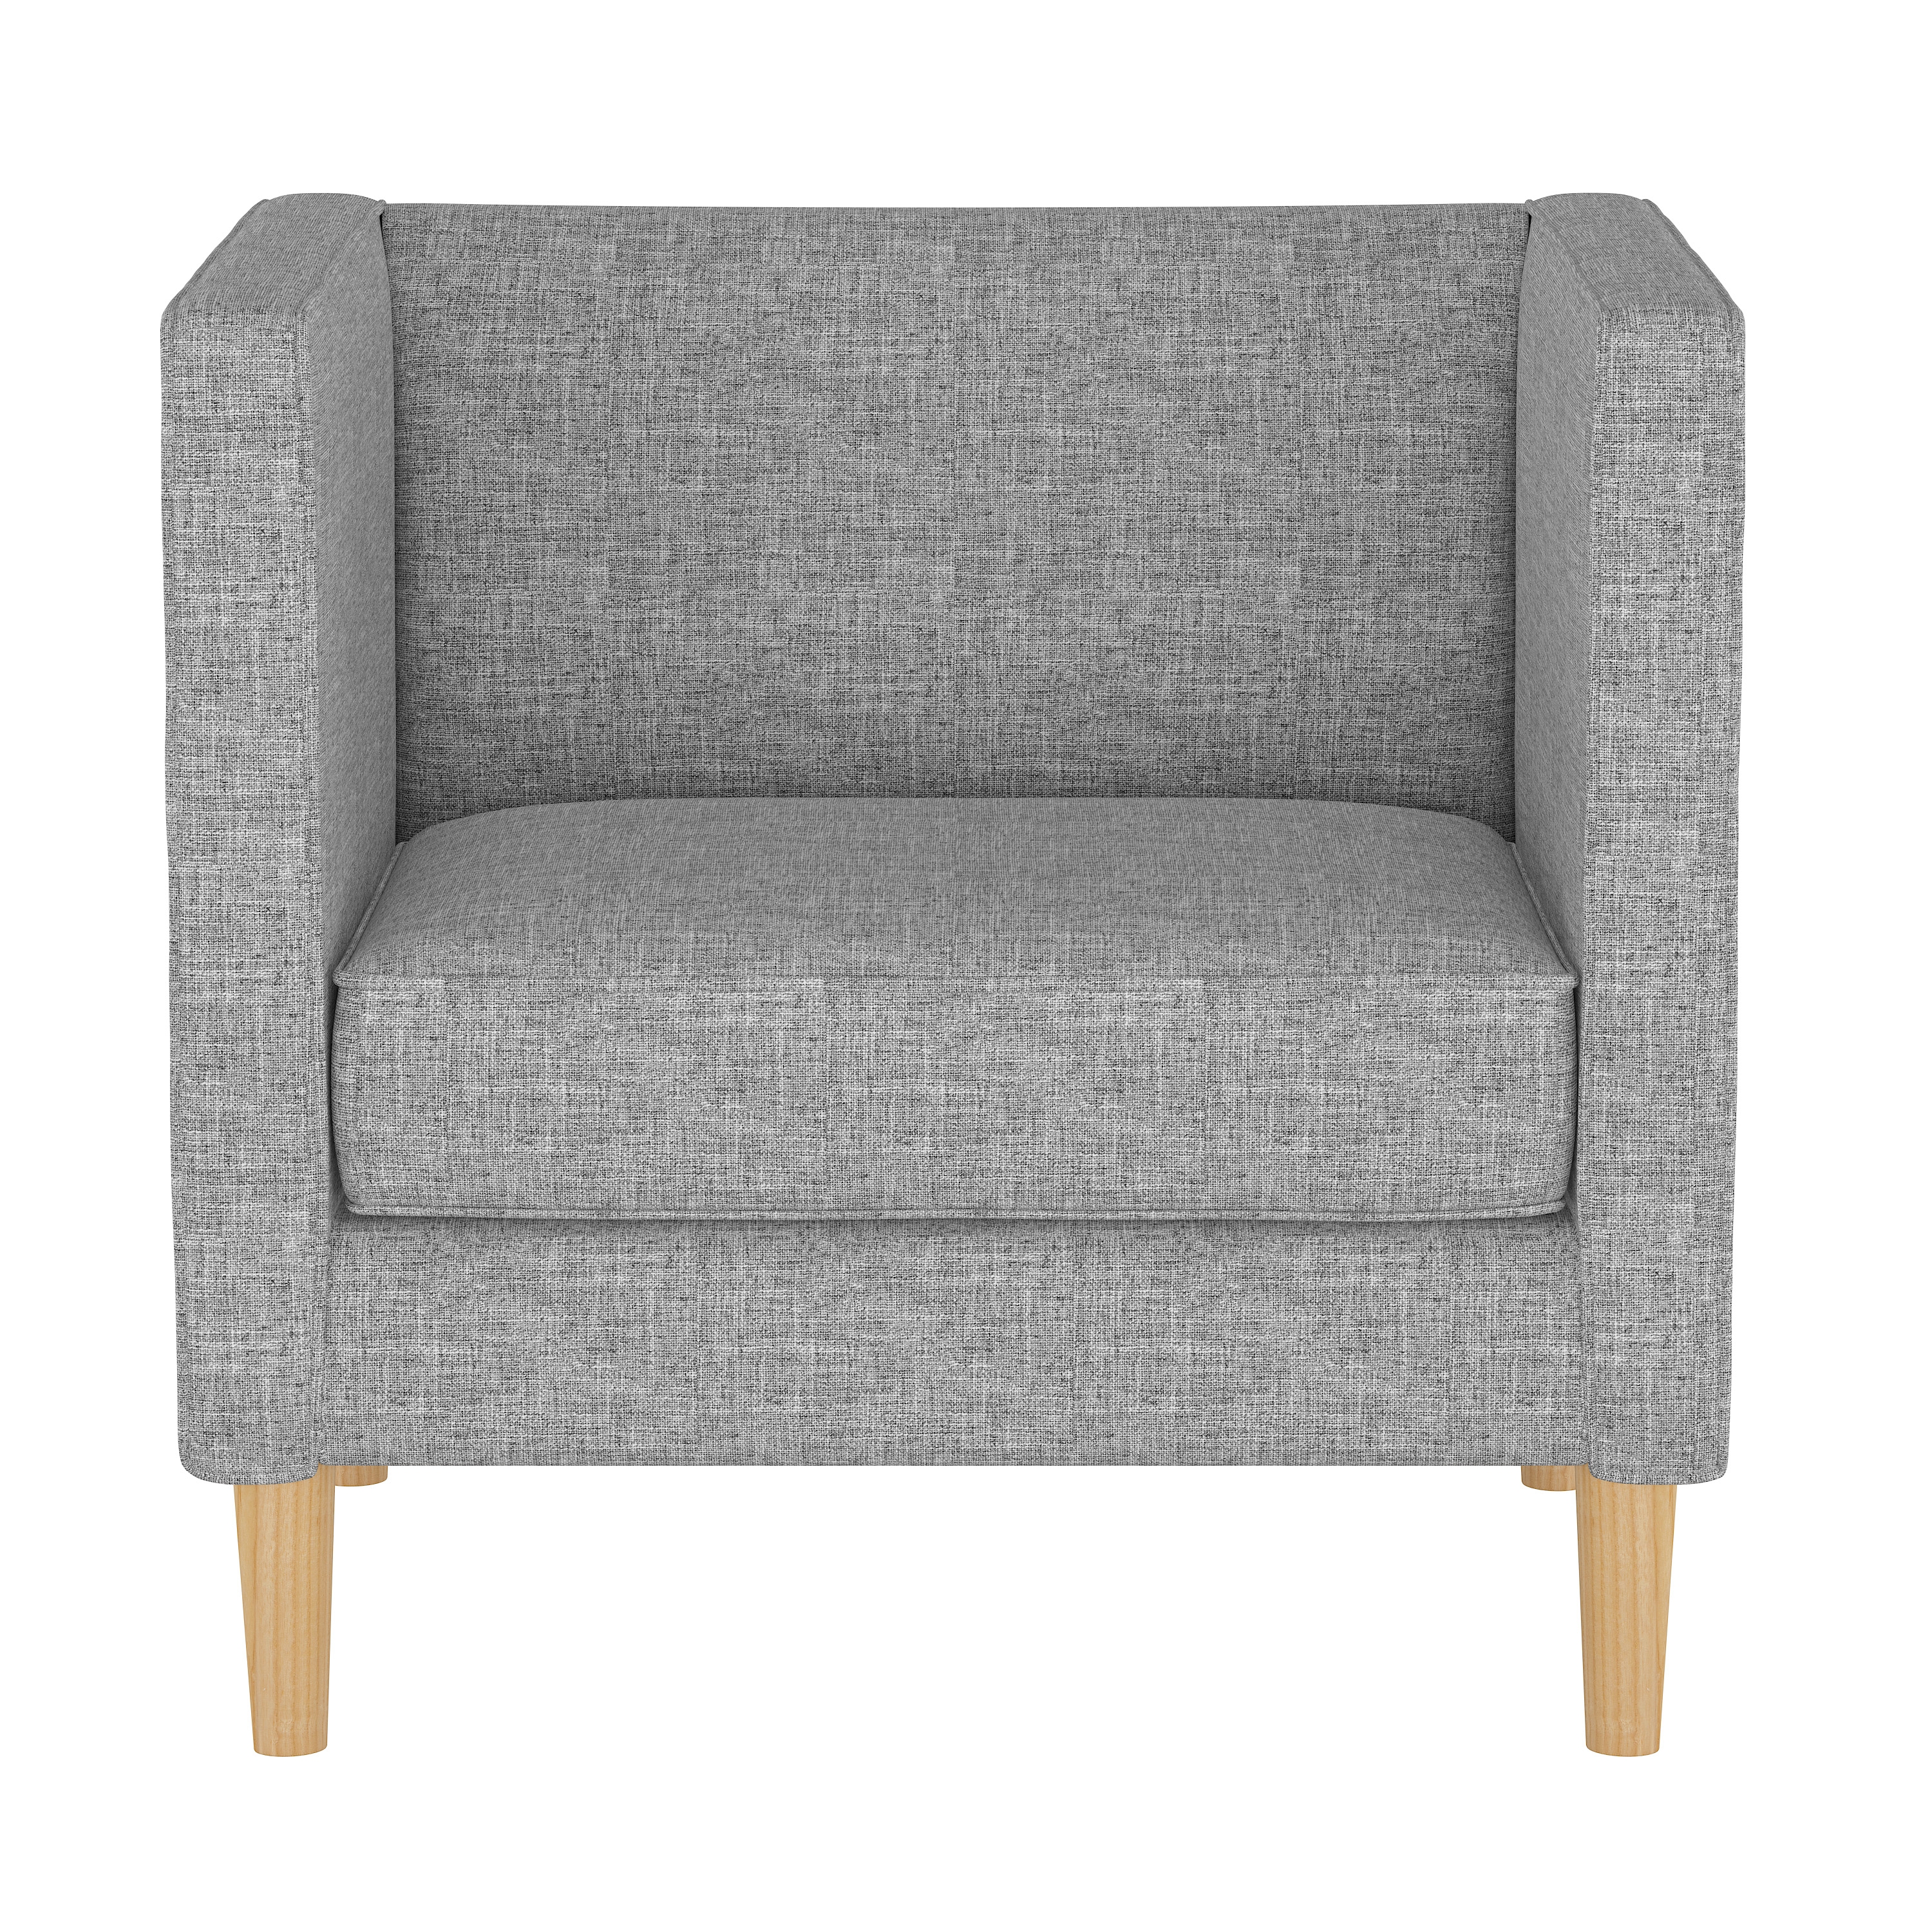 Humboldt Chair, Pumice - Image 1